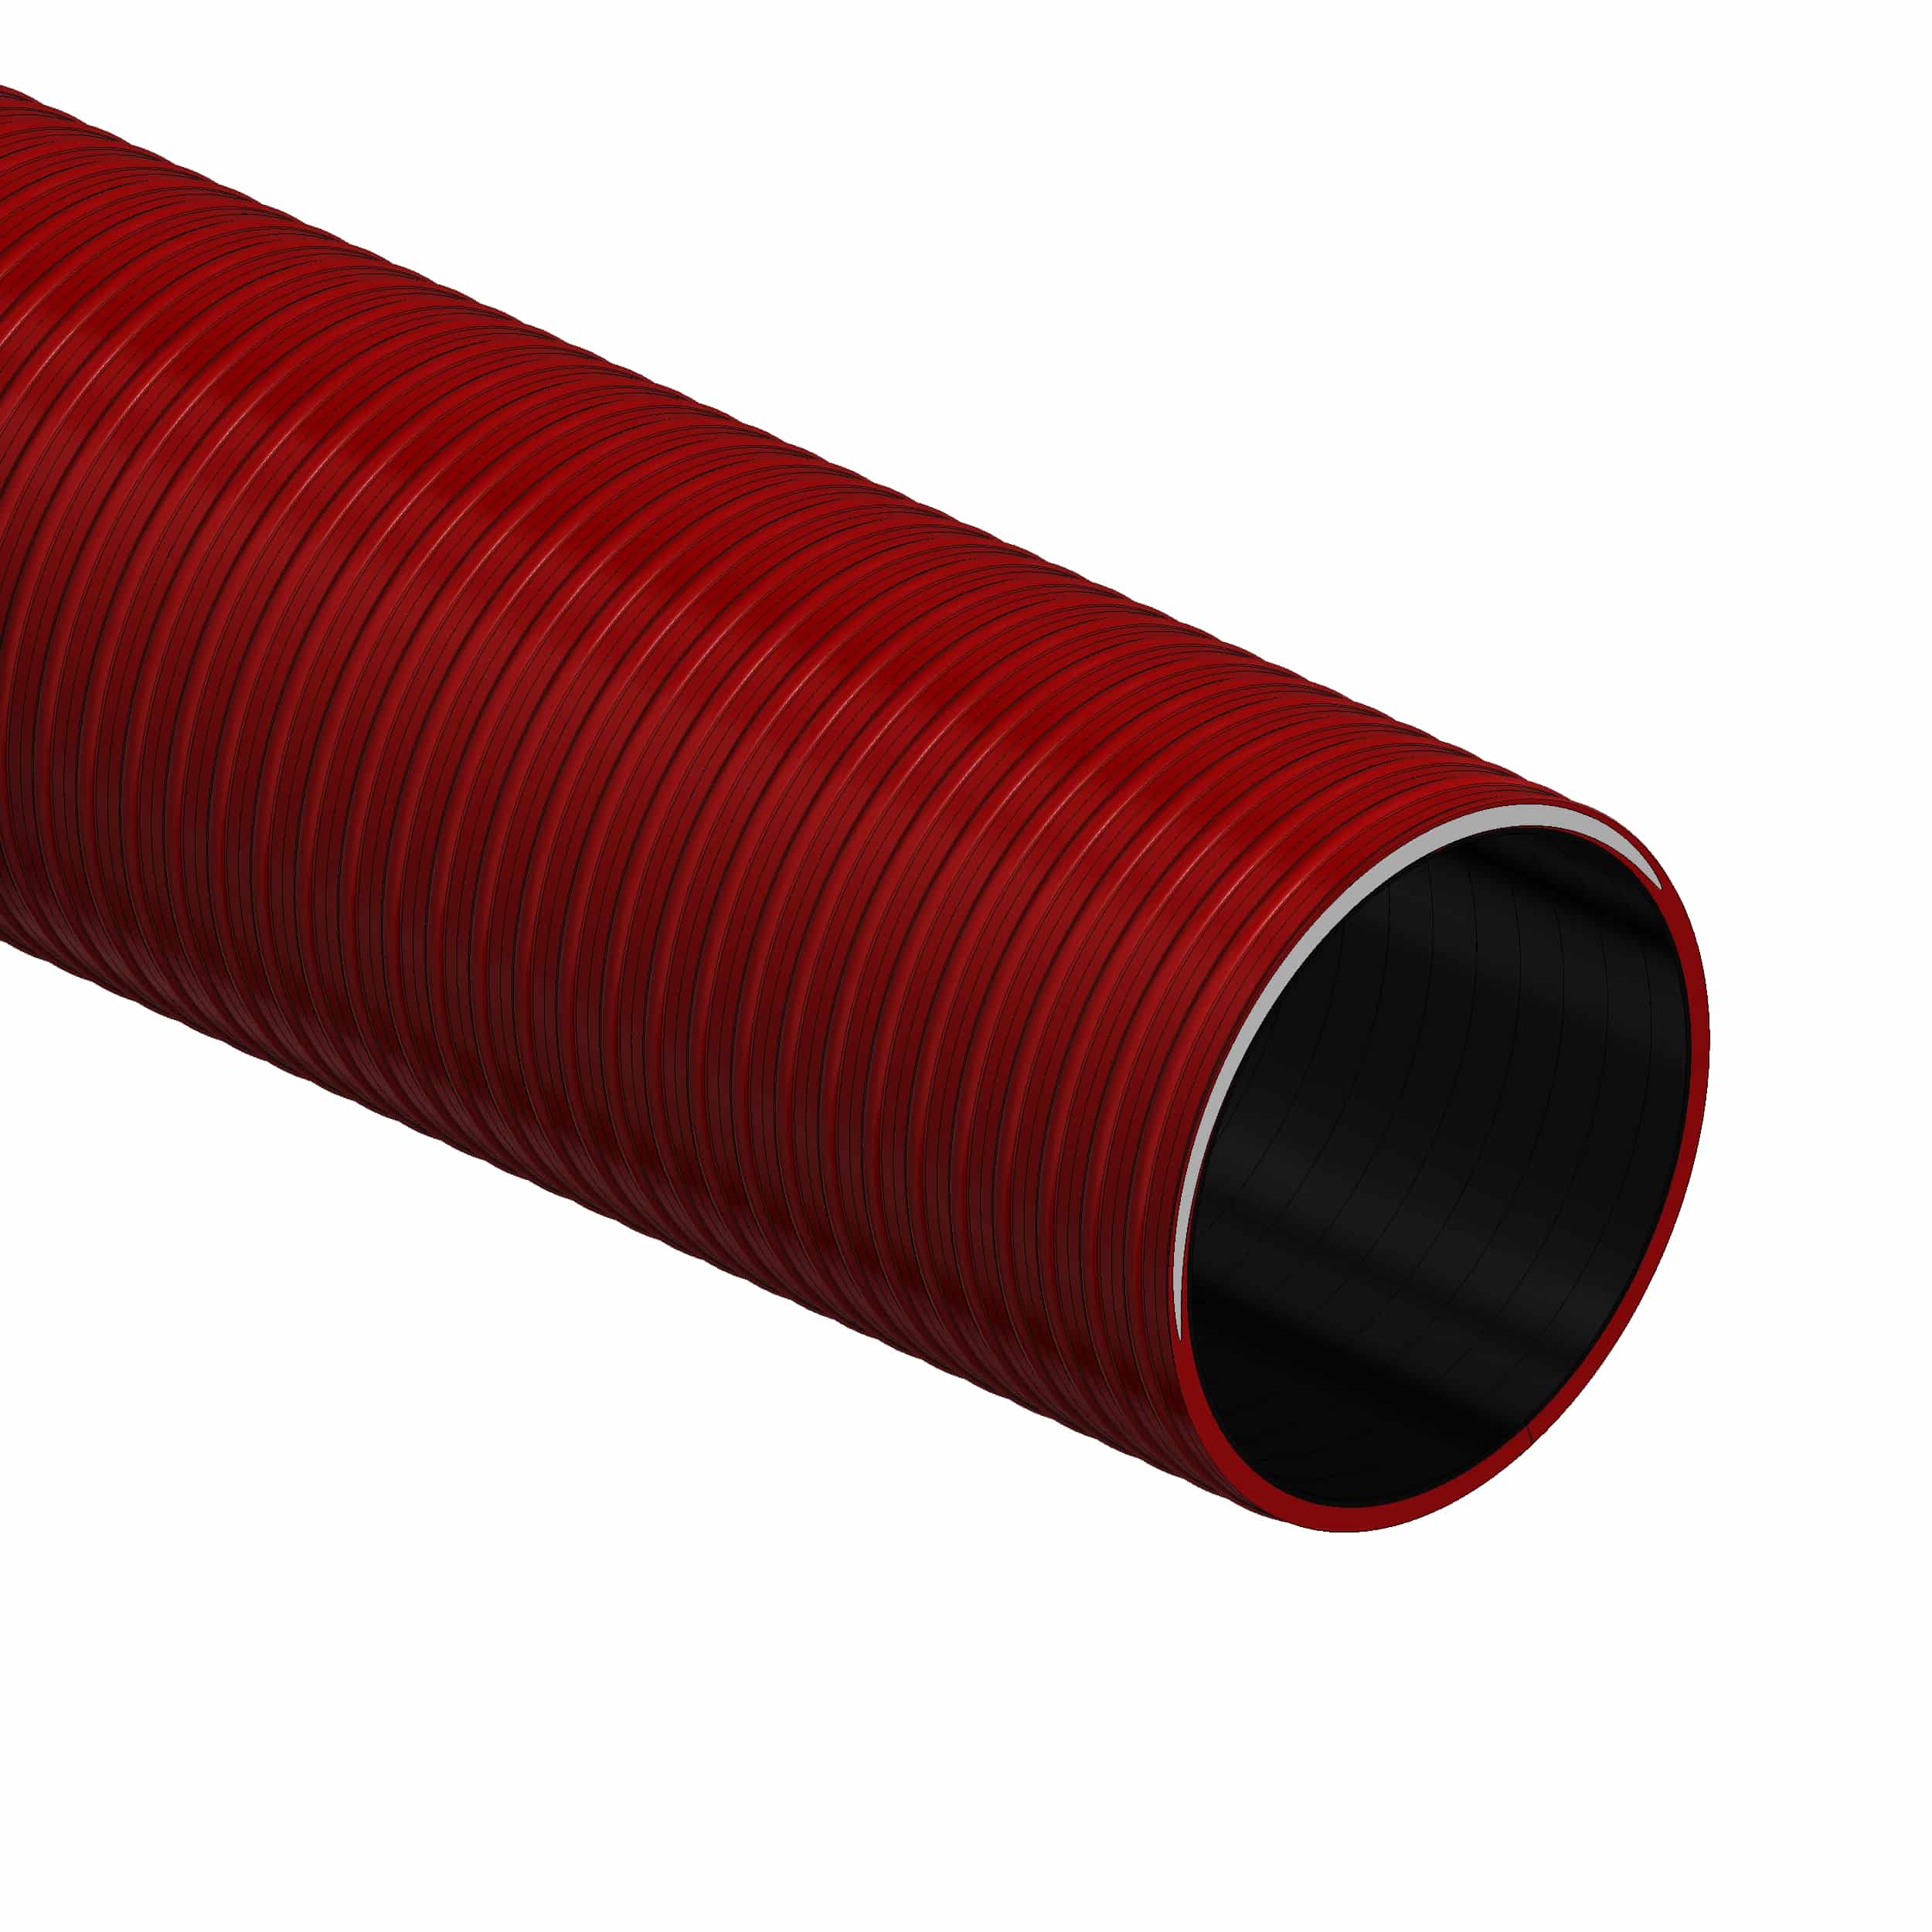 Kabel-Schutz-System KSS125 13000 mm